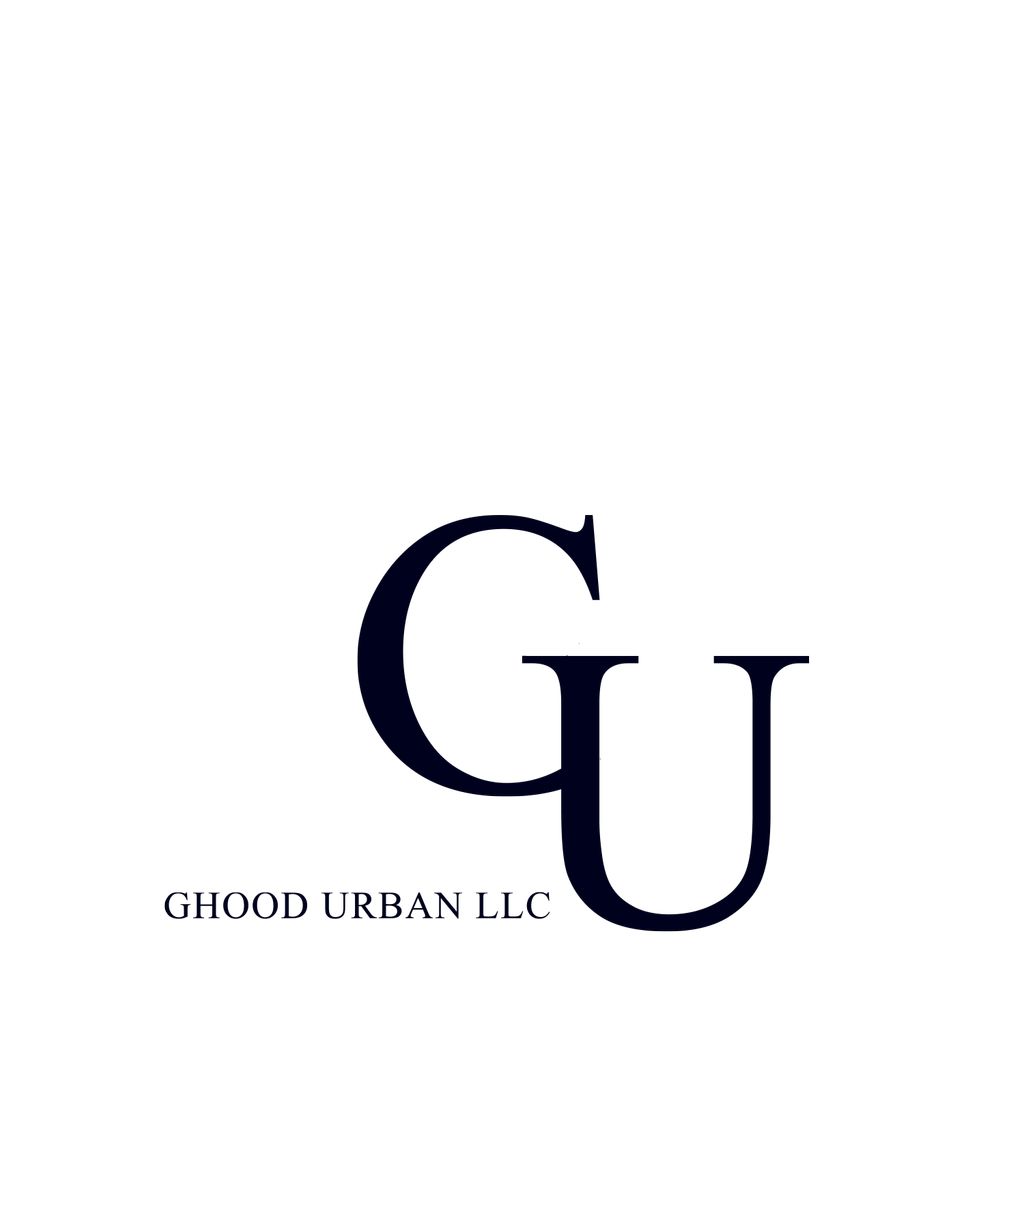 Ghood Urban LLC